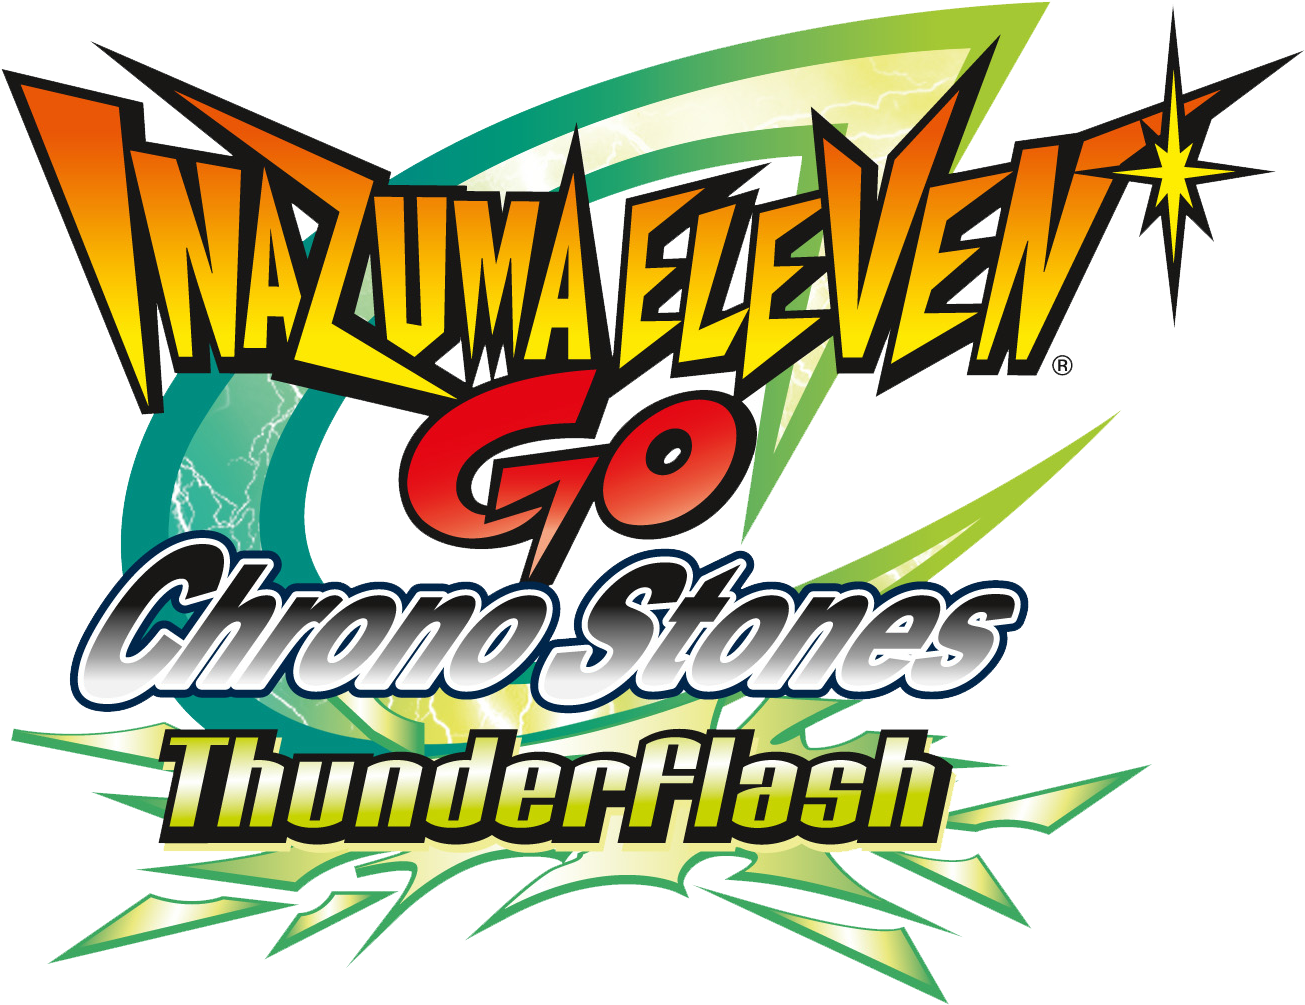 Inazuma Eleven Go Chrono Stones Thunderflash Wildfire - Inazuma Eleven Go Chrono Stones Thunderflash Logo (1328x1039)